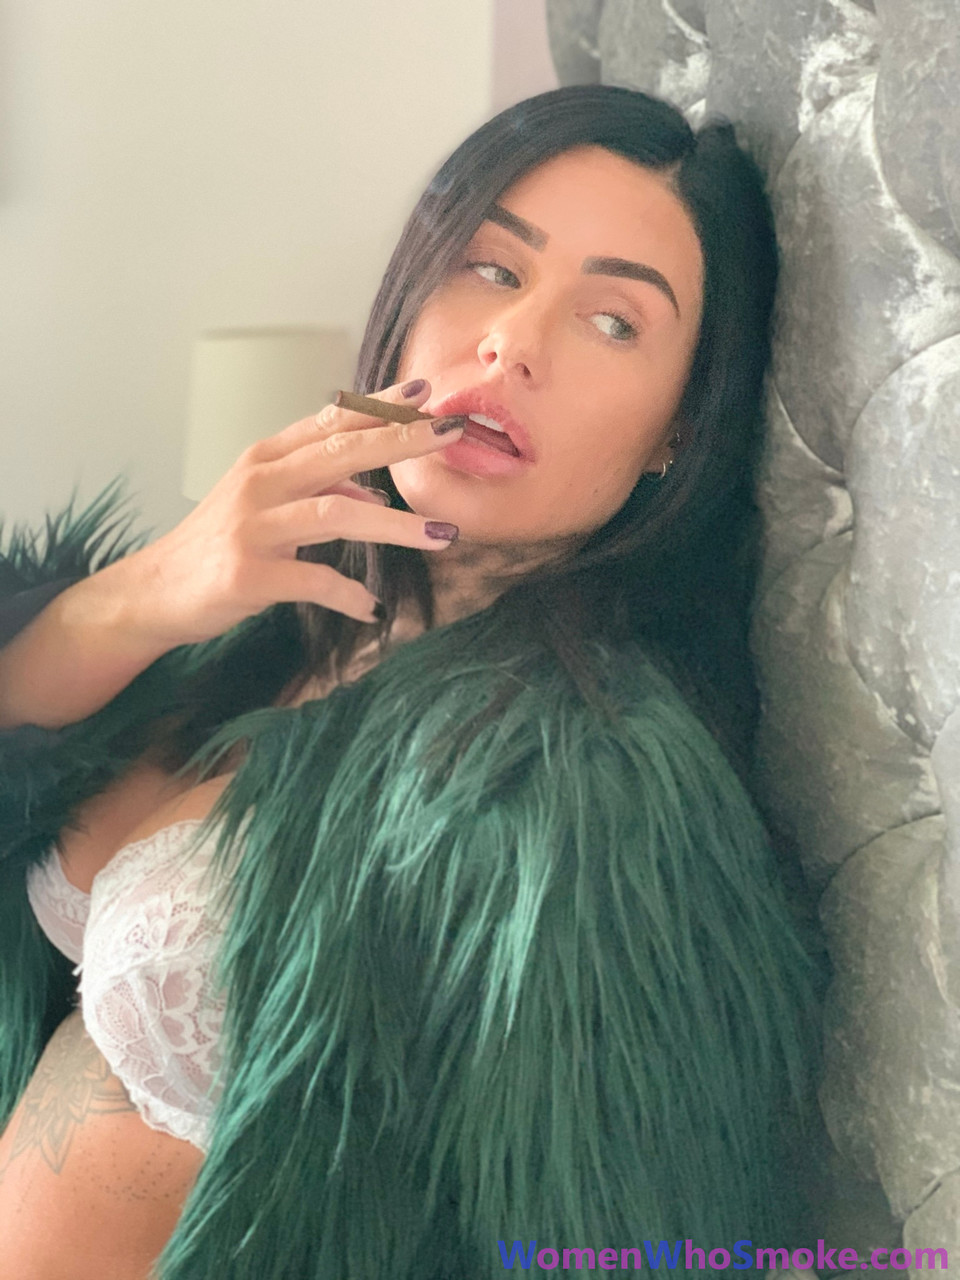 Stunning brunette teases with her big boobs while smoking in sexy lingerie porno fotoğrafı #426607869 | Women Who Smoke Pics, Smoking, mobil porno